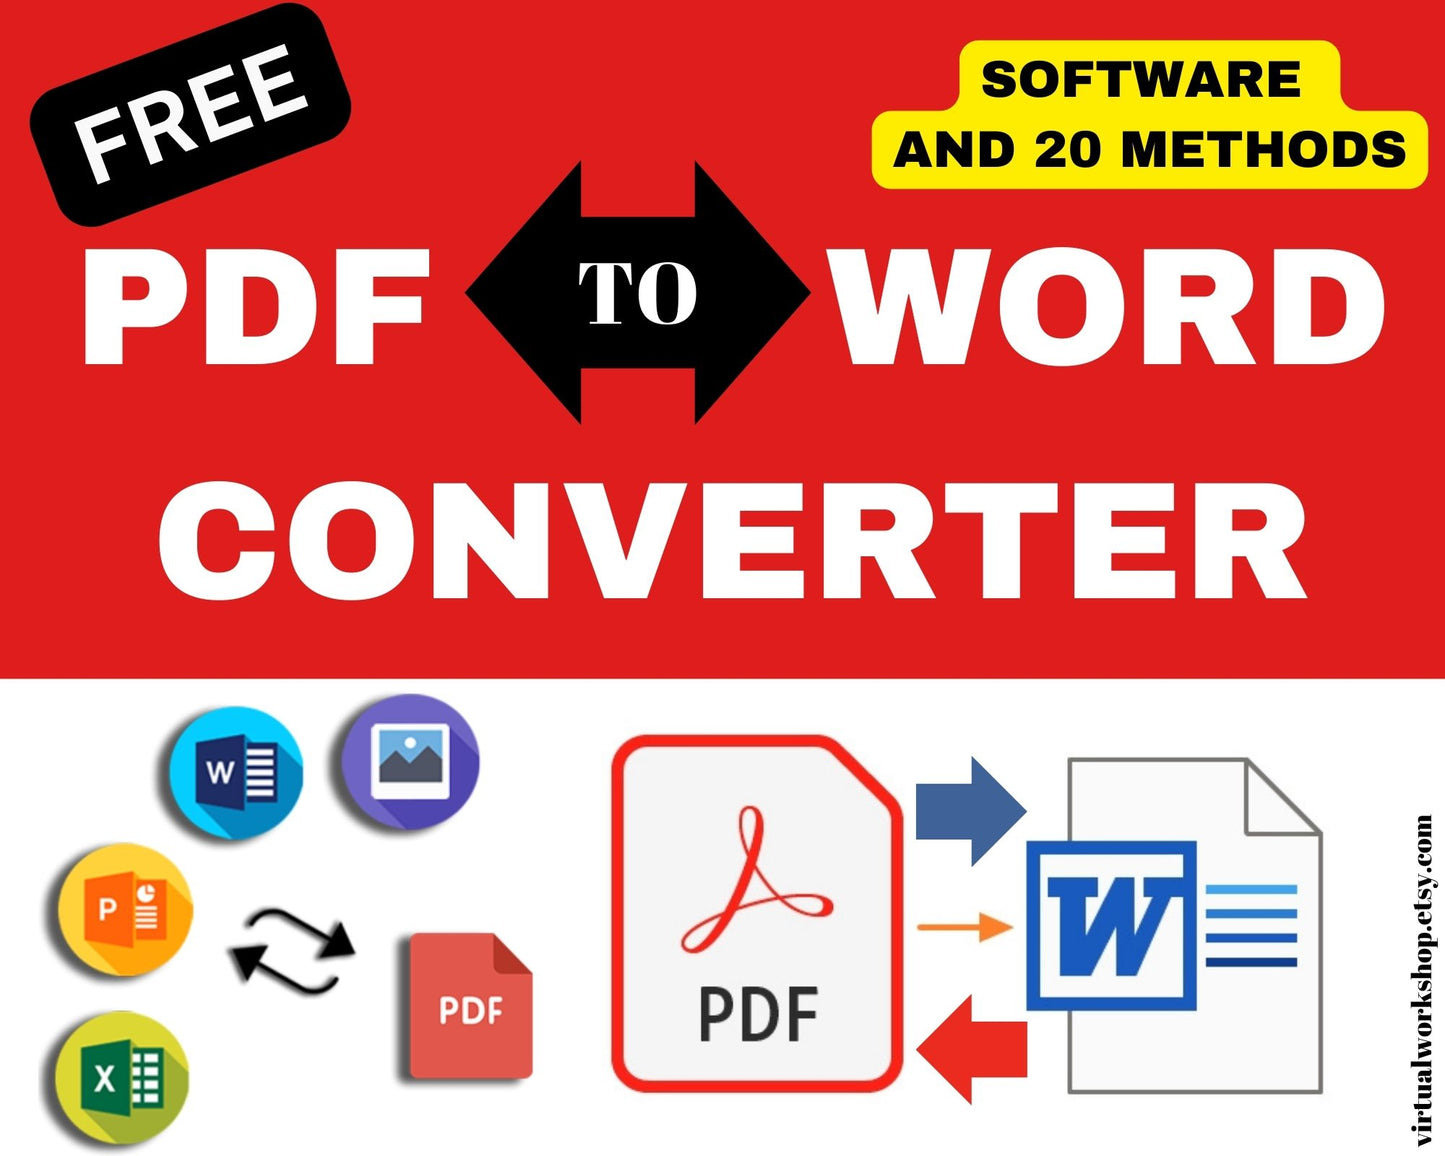 Free PDF to WORD Converter Software, PDF to Word Conversion, Pdf to Doc, Convert Pdf to Word Doc Free, Word to Pdf, Adobe Pdf Converter